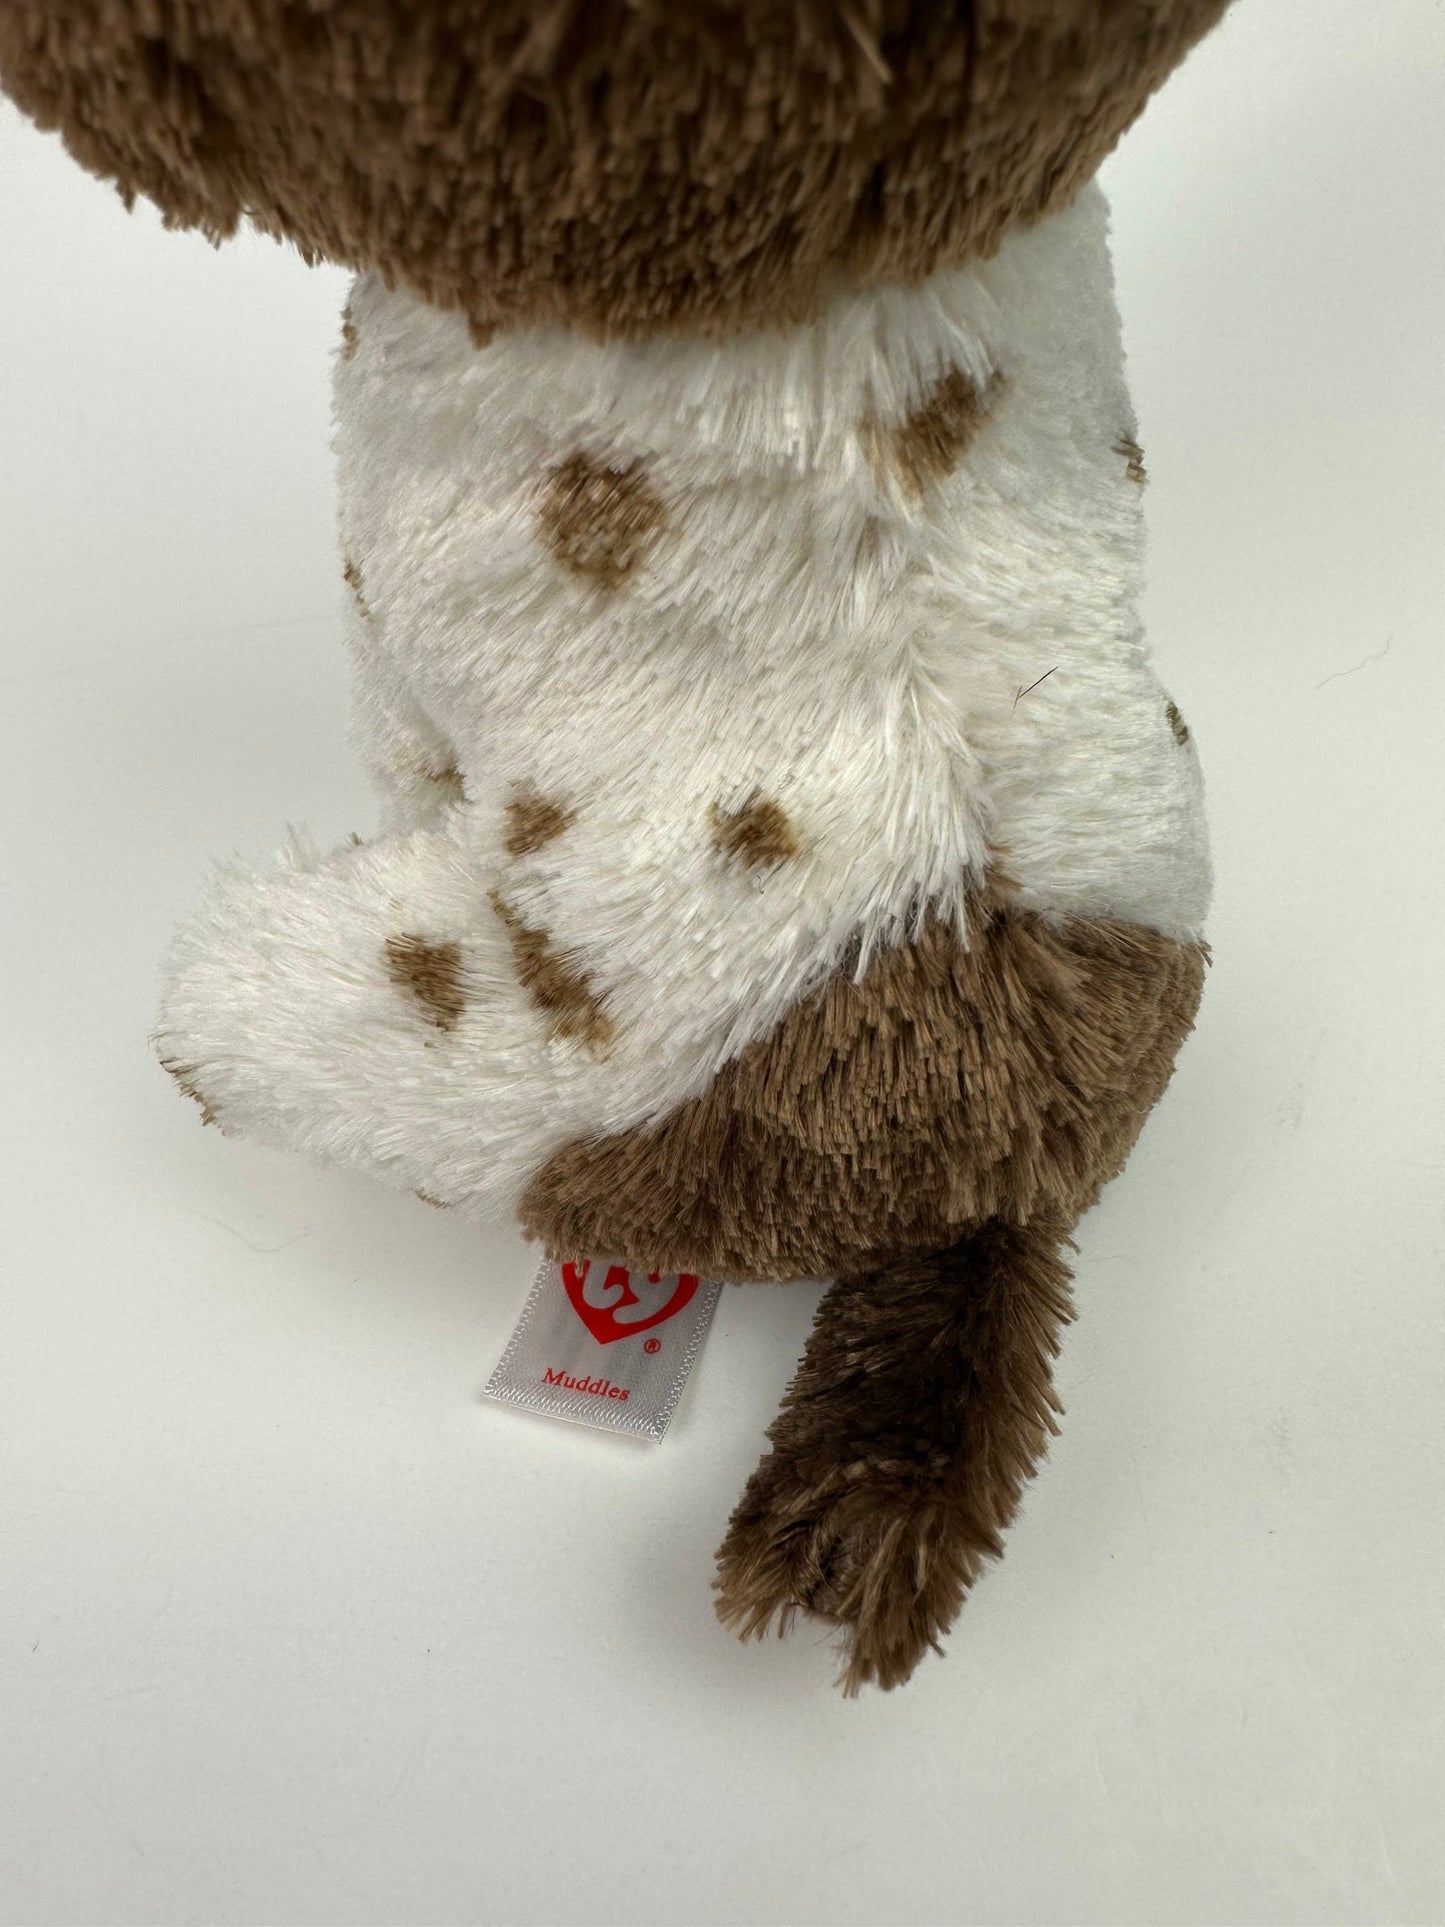 Ty Beanie Boo “Muddles” the Dog (6 inch)